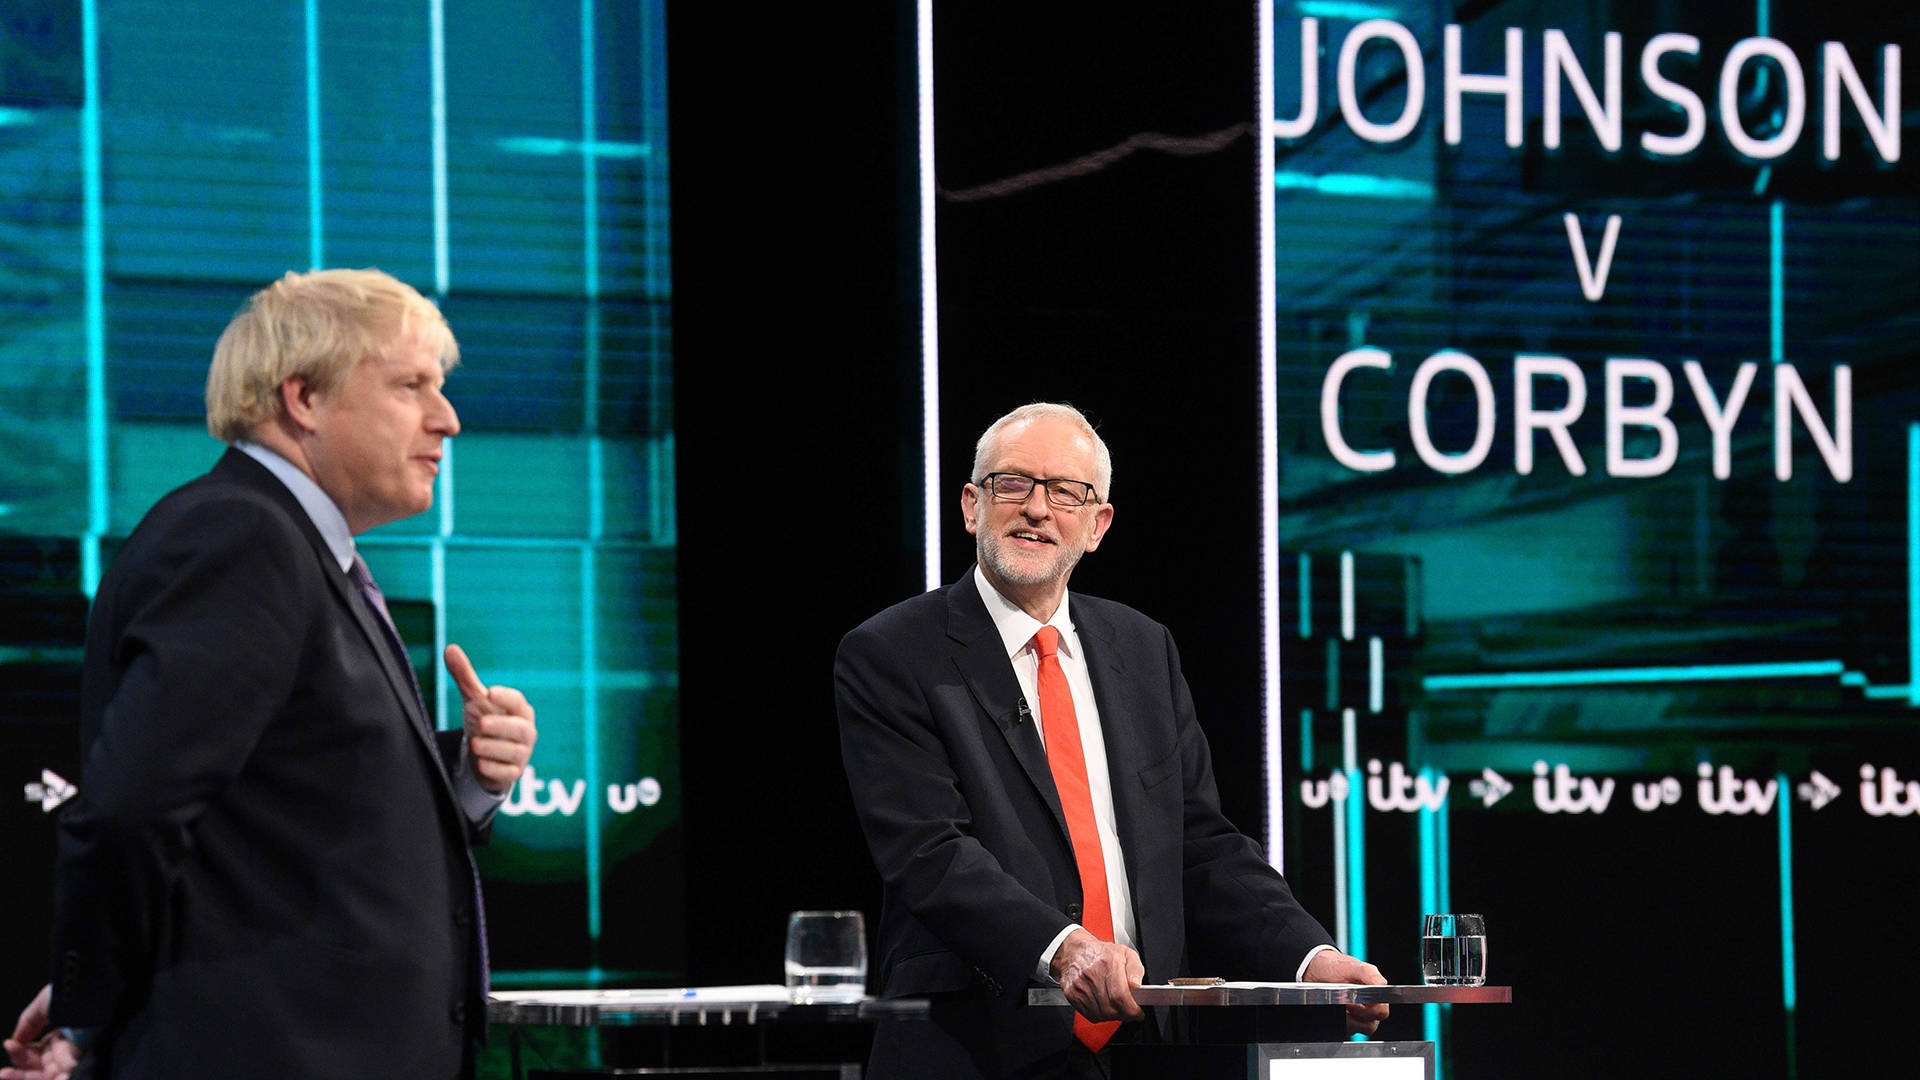 Boris Johnson und Jeremy Corbyn